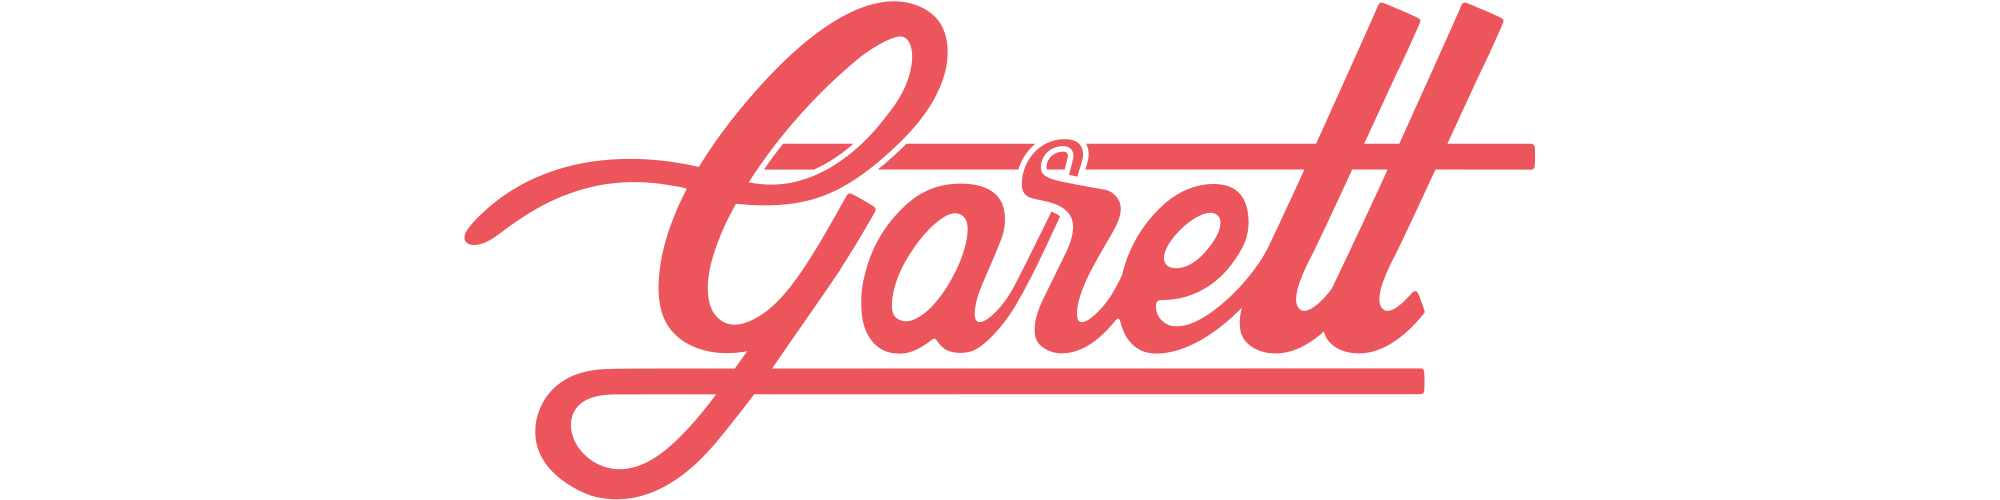 Garett's logo uses red color psychology